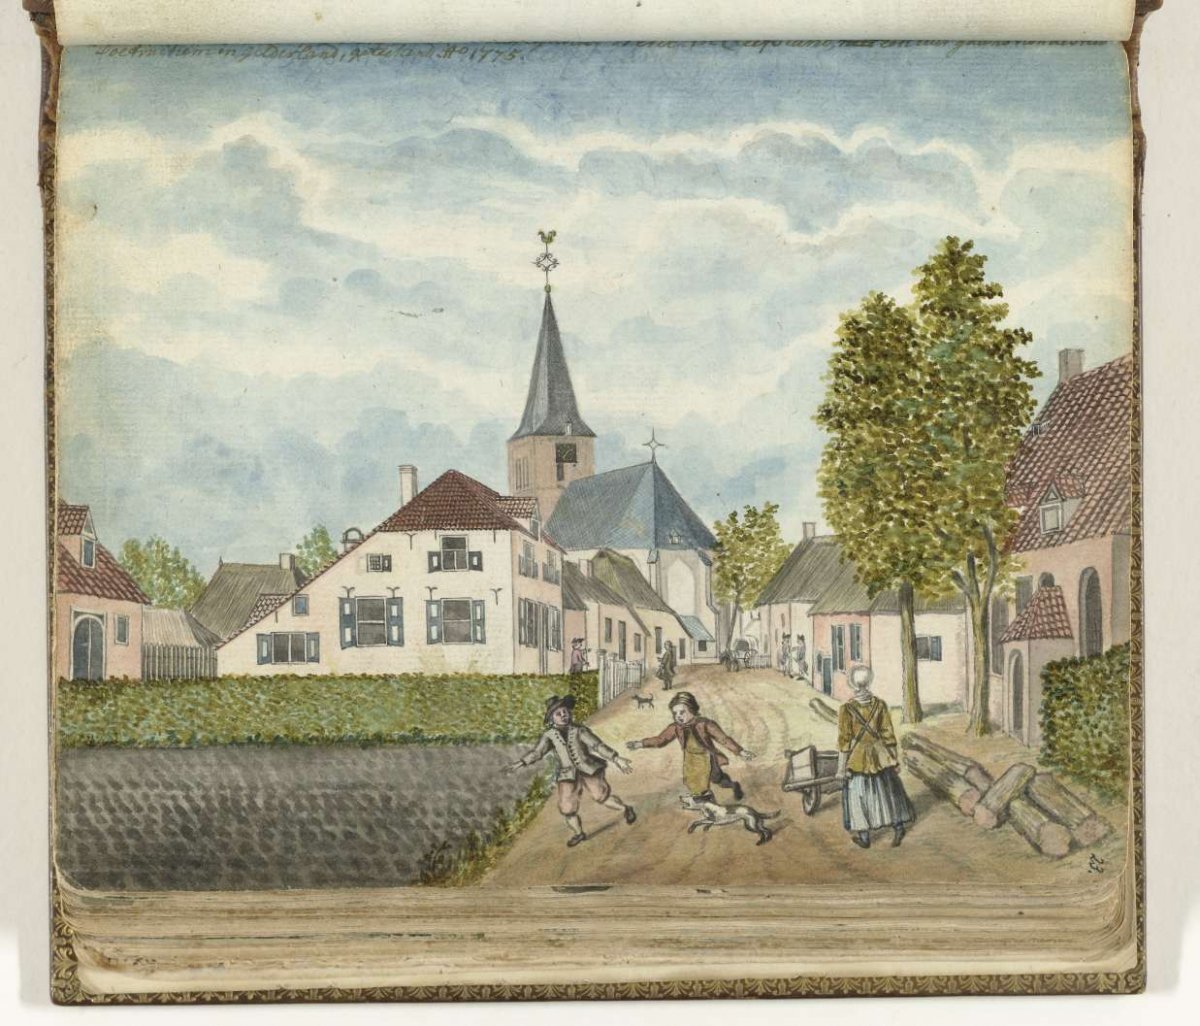 The village of Wehl in Cleefsland, Jan Brandes, 1775